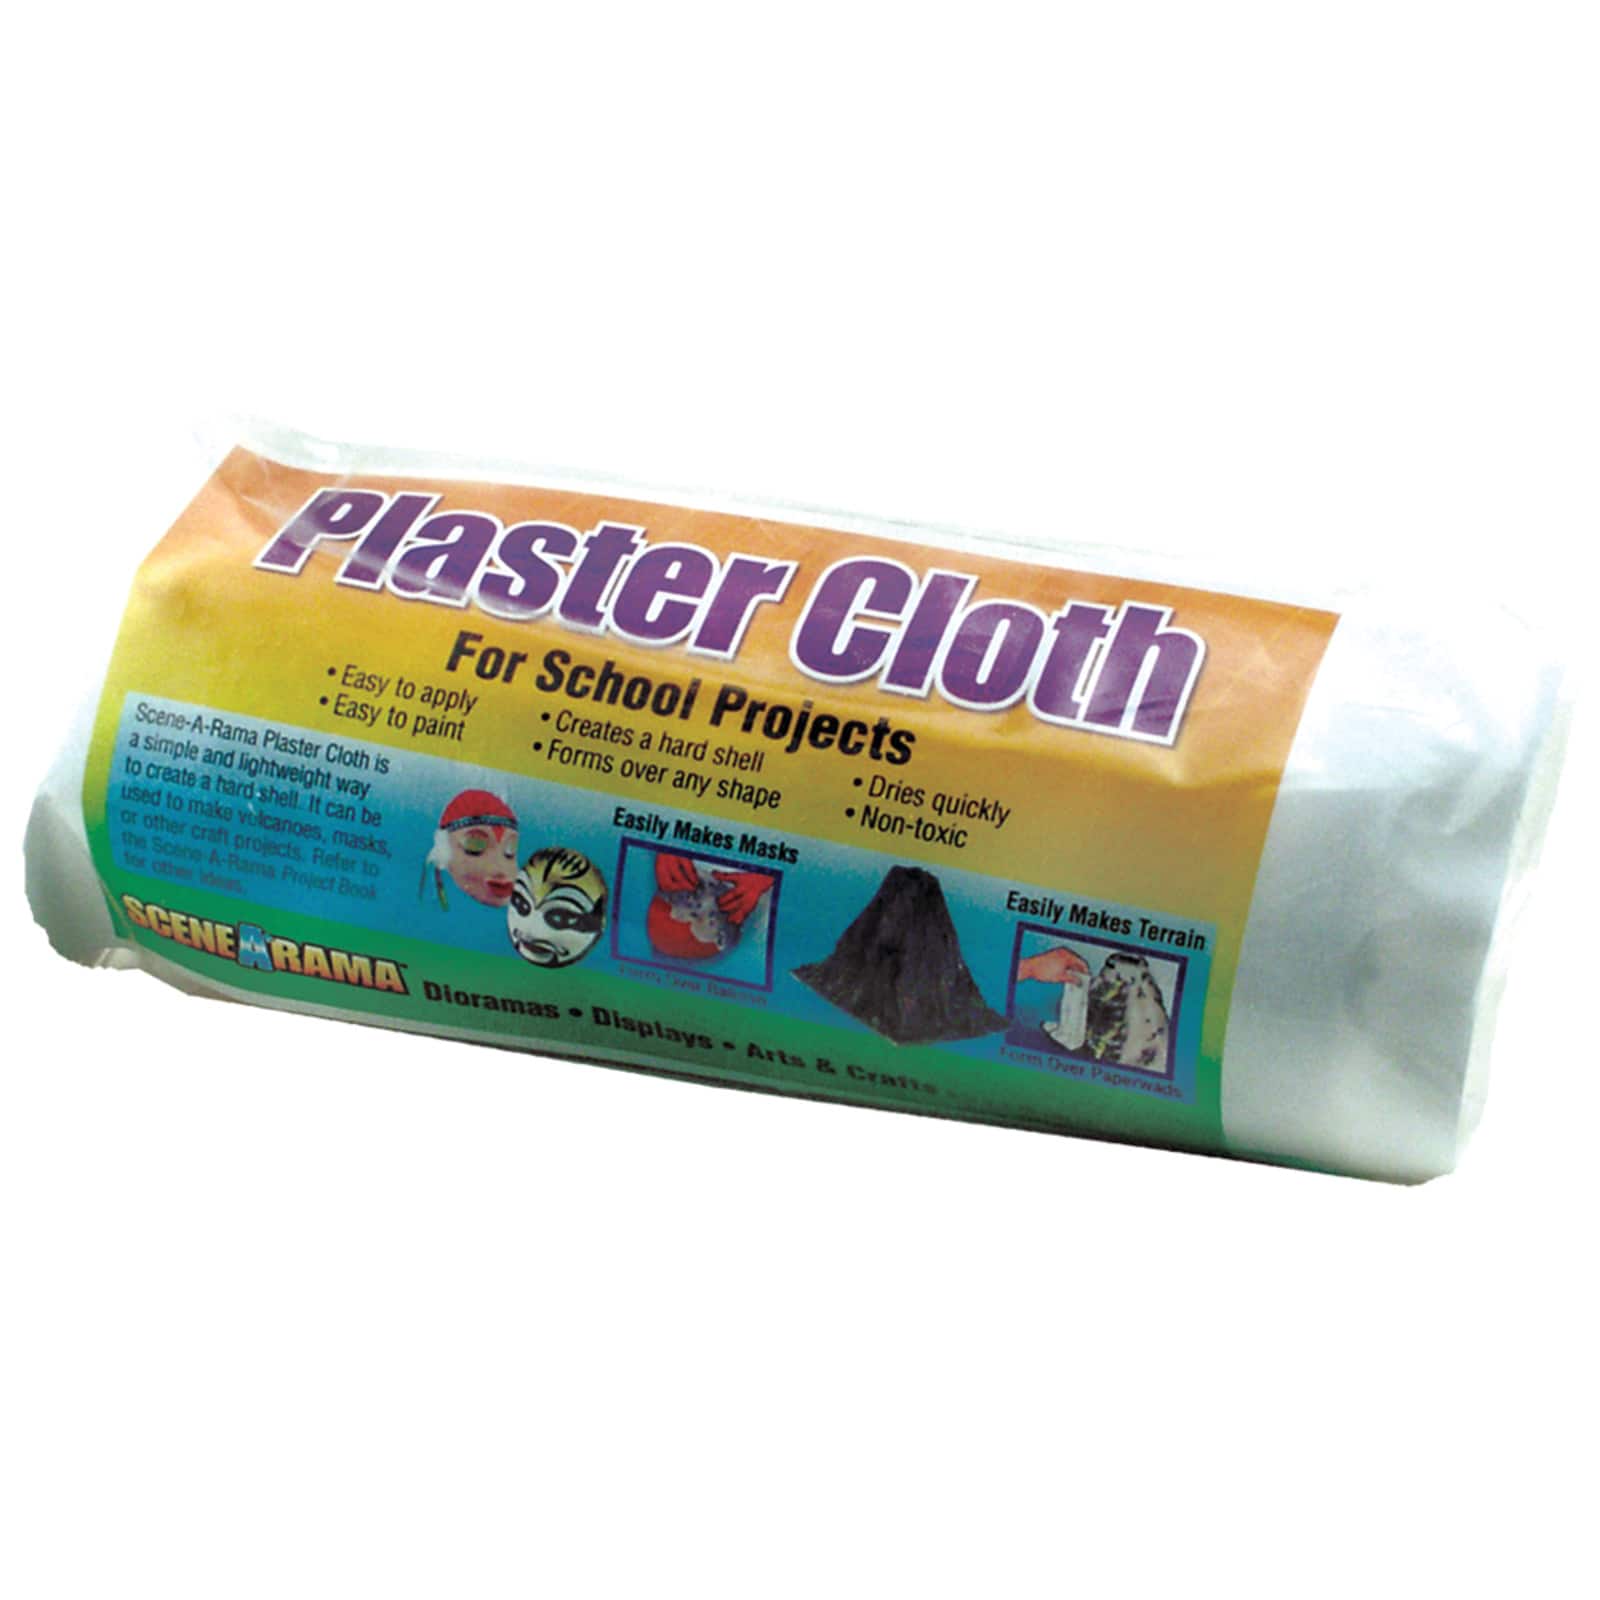 Woodland Scenics Plaster Cloth